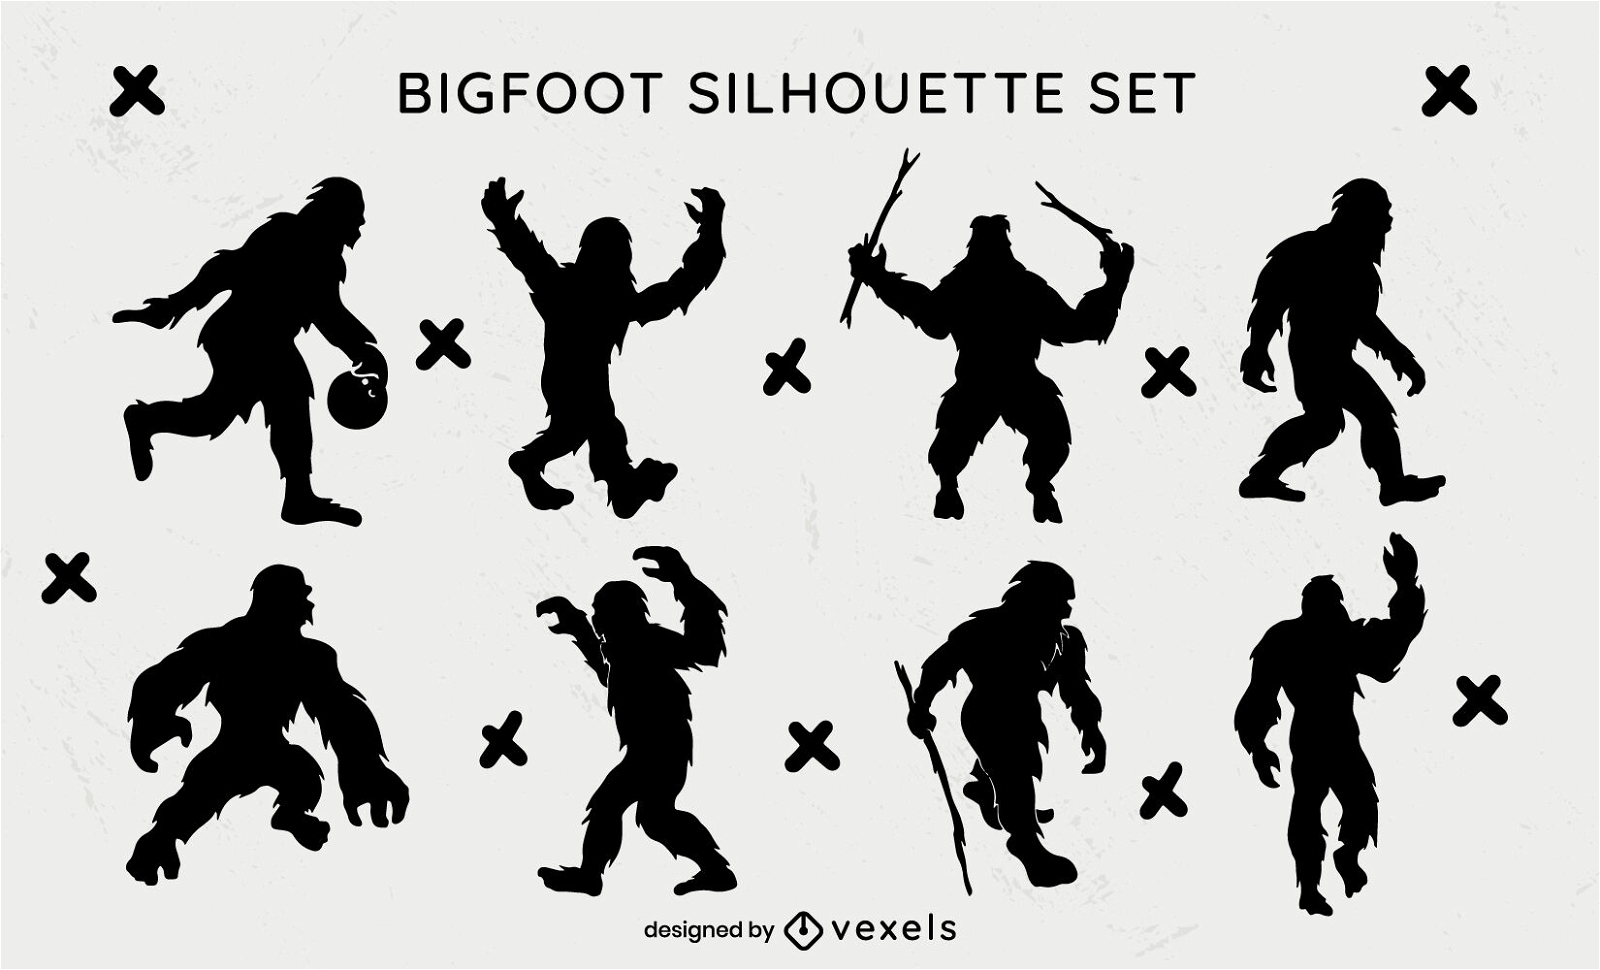 Bigfoot silhouette set